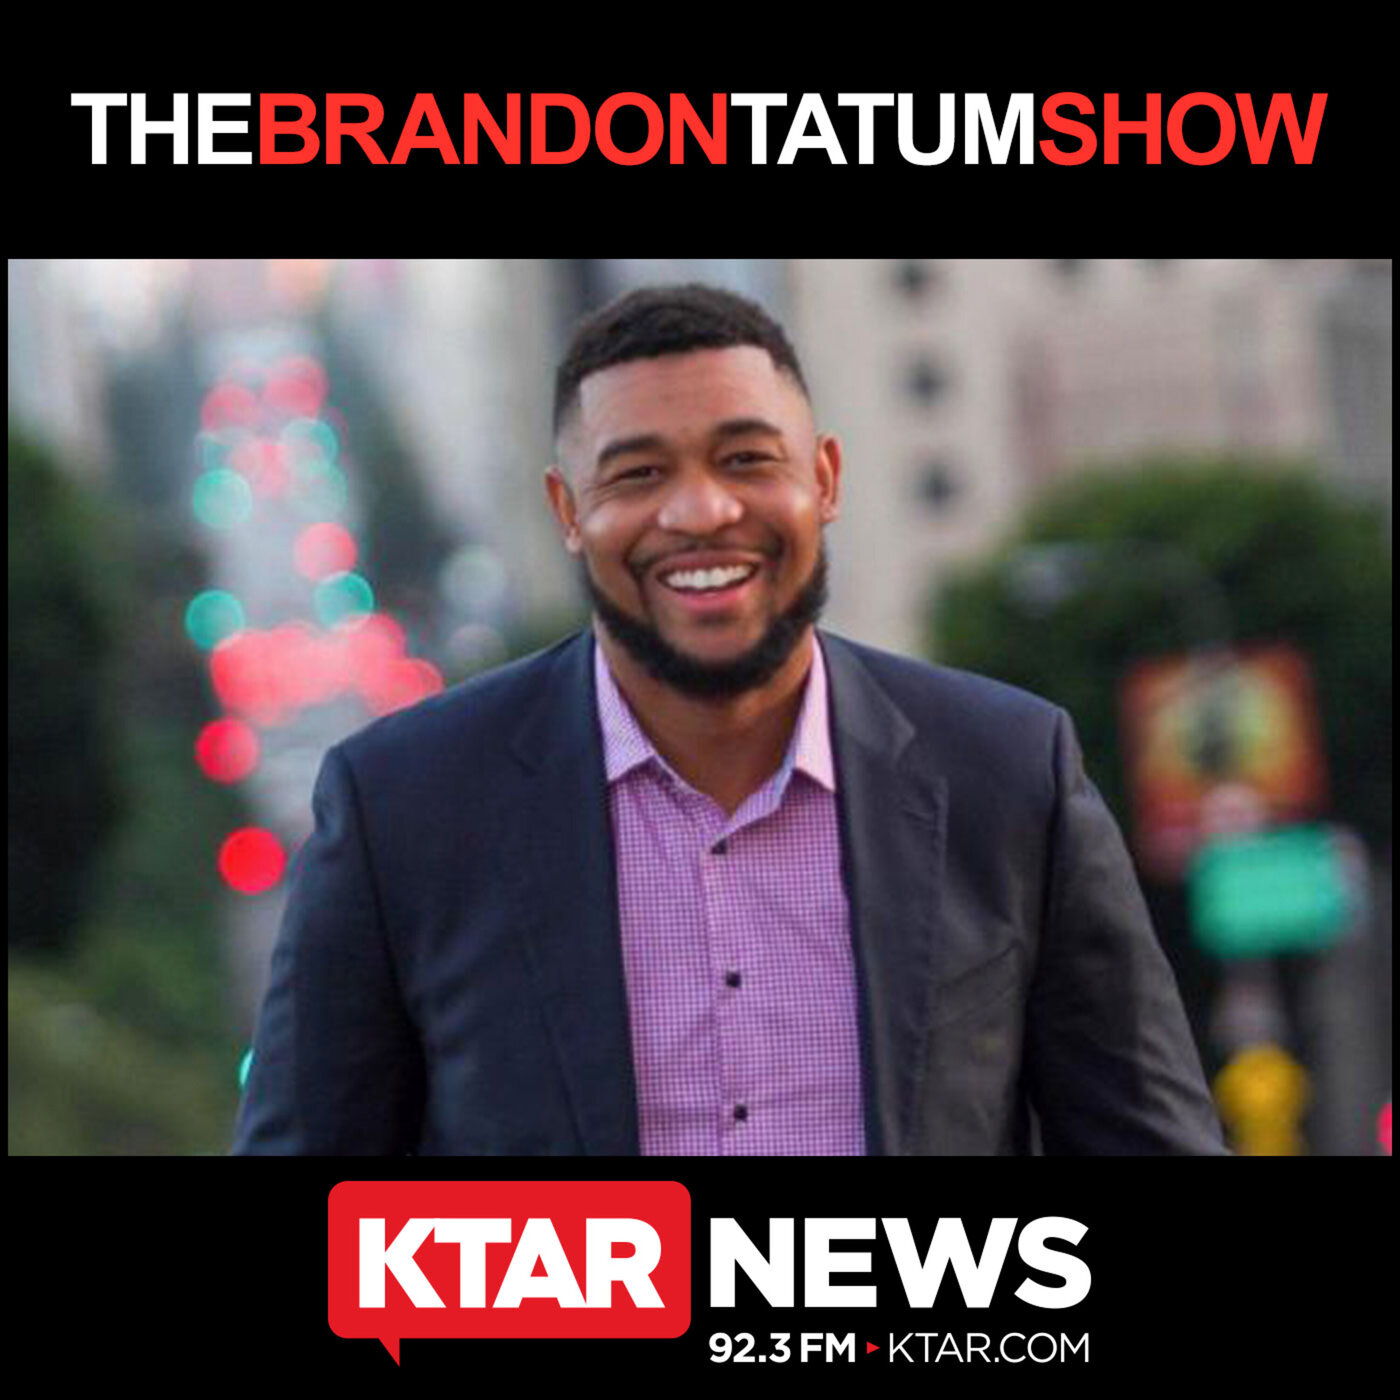 February 29, 2020 - The Brandon Tatum Show